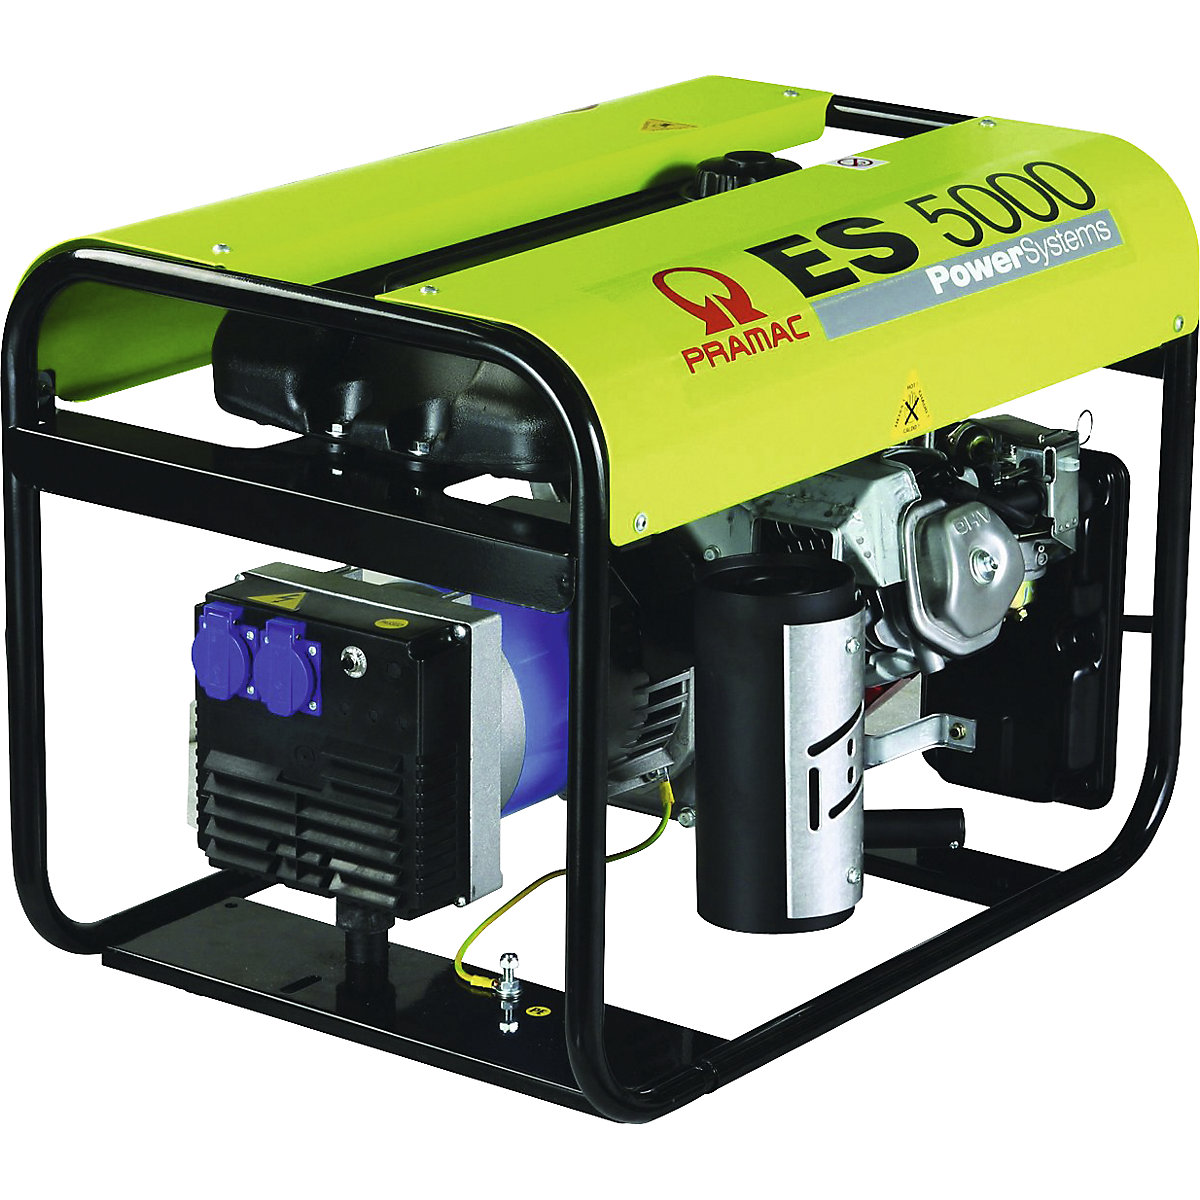 ES series power generator – petrol, 230 V – Pramac